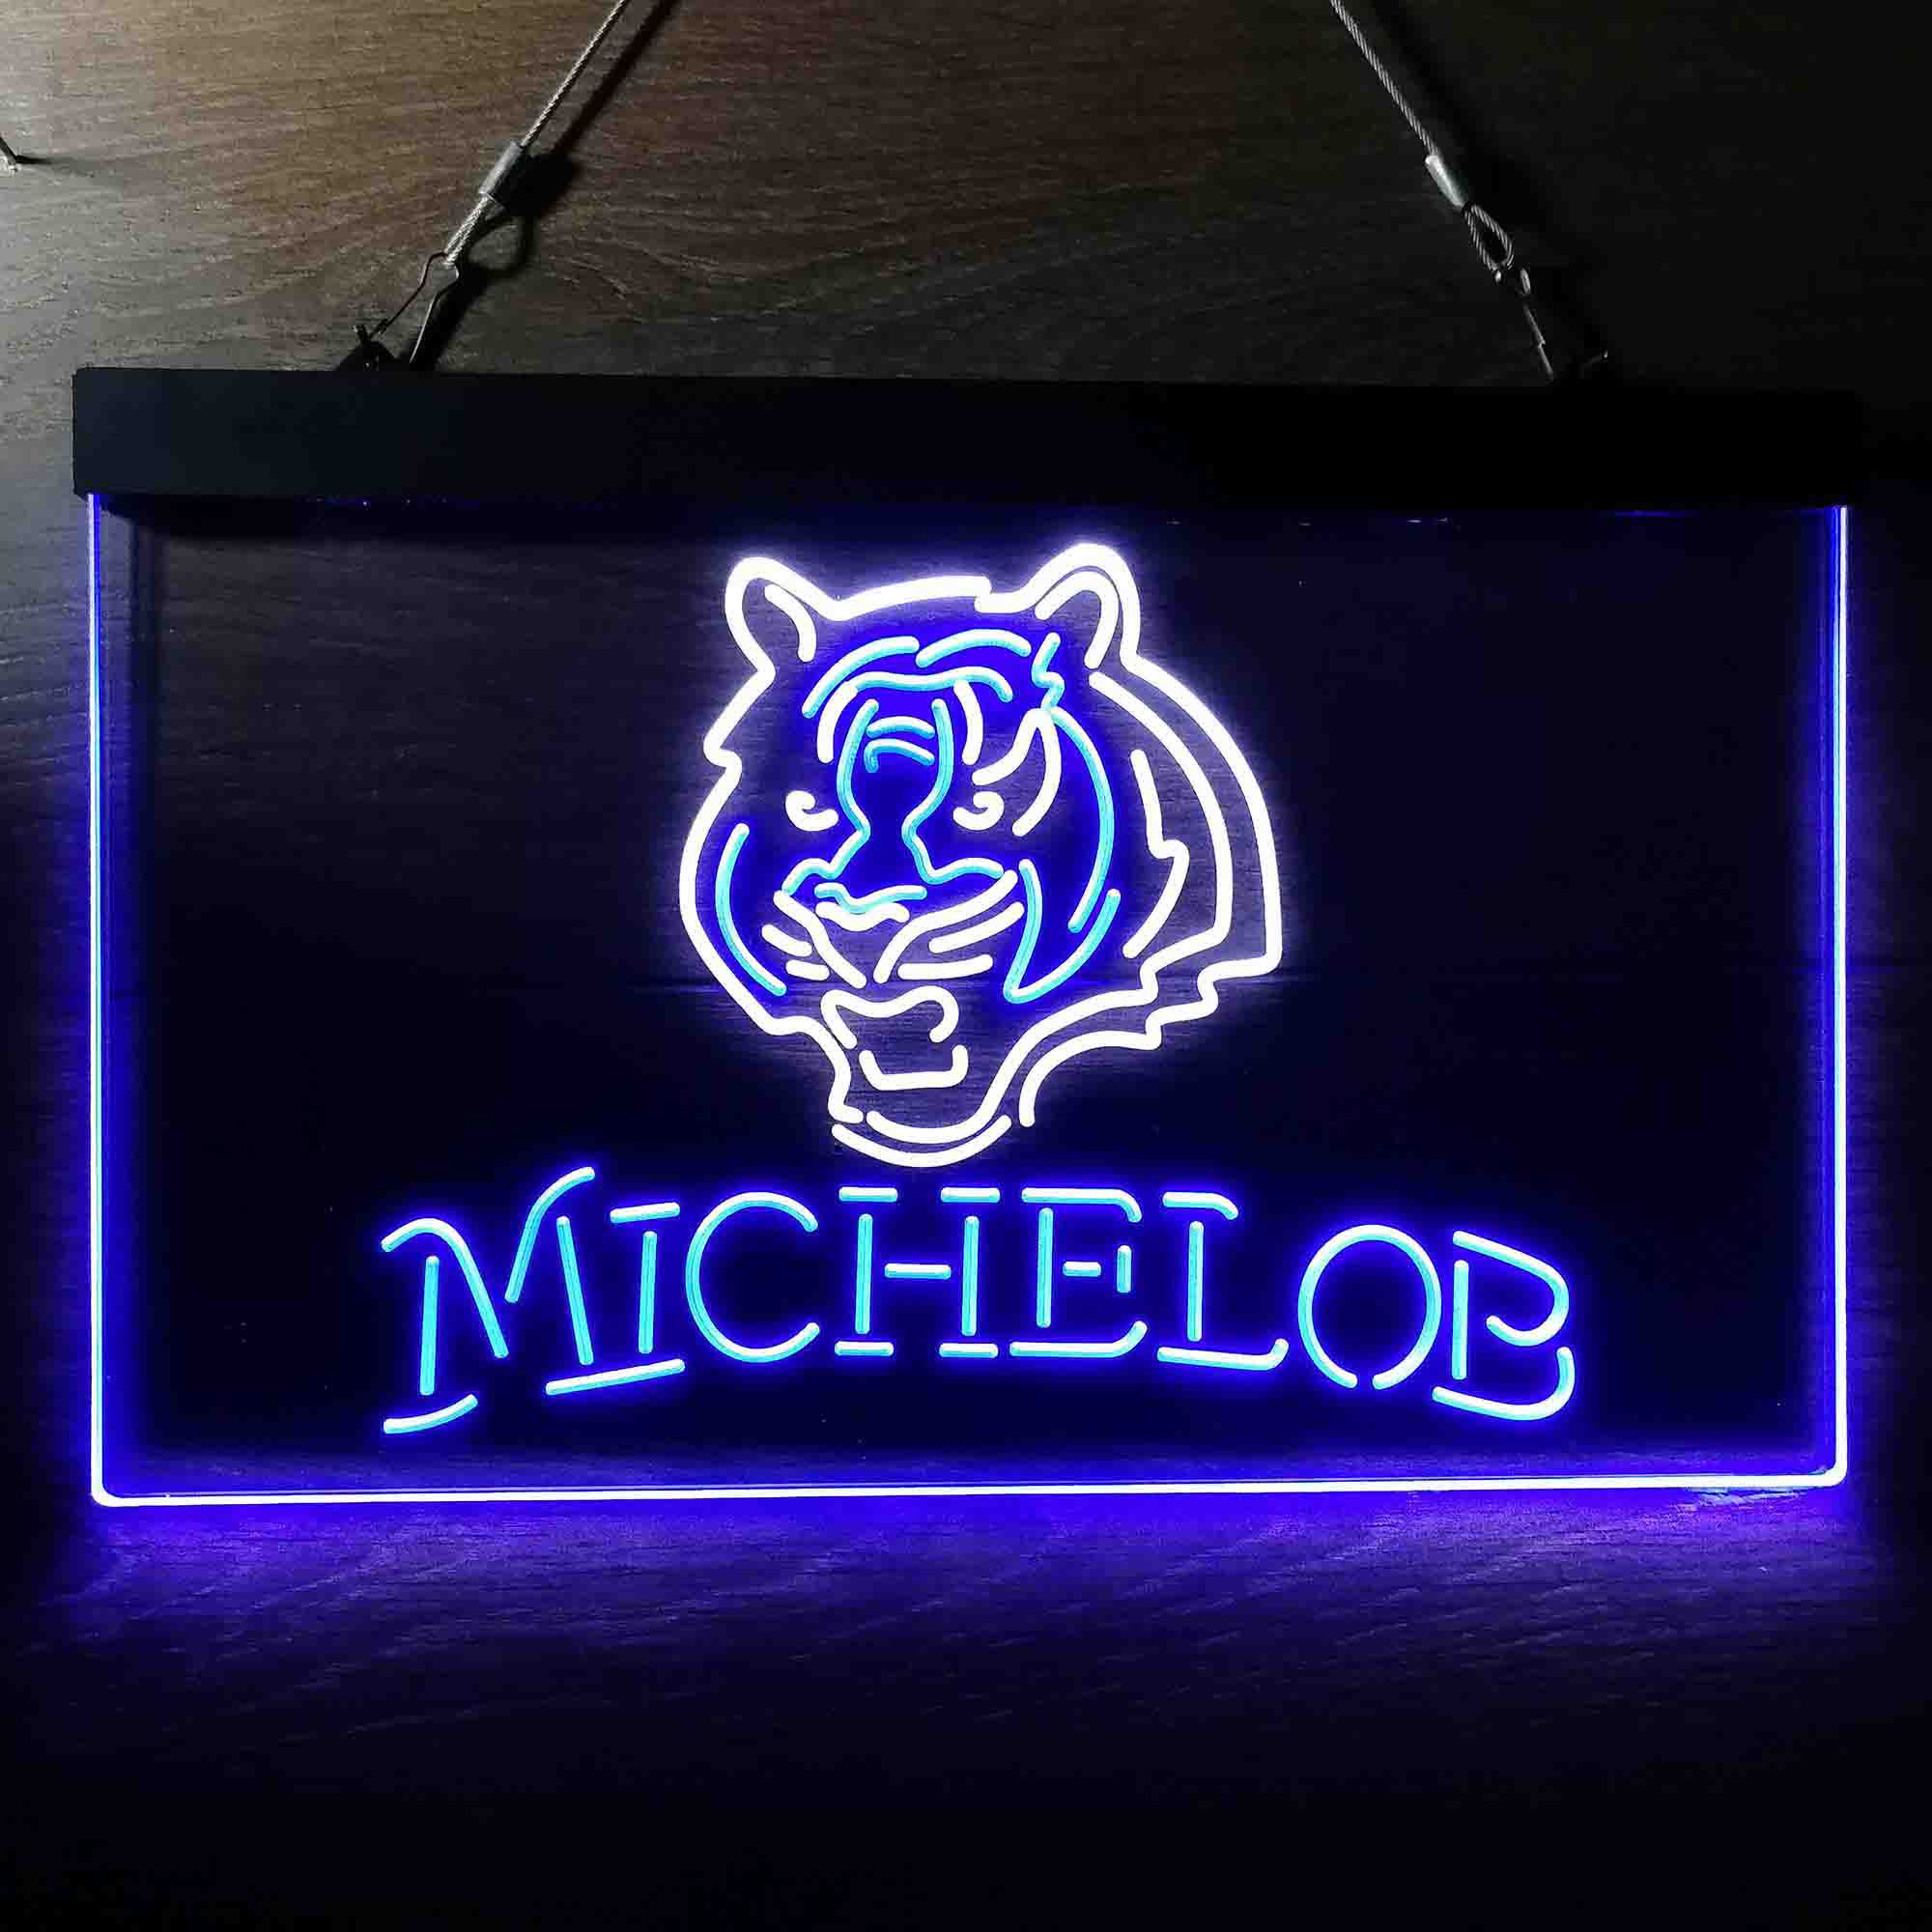 Michelob Bar Cincinnati Bengals Est. 1968 Neon-Like LED Sign